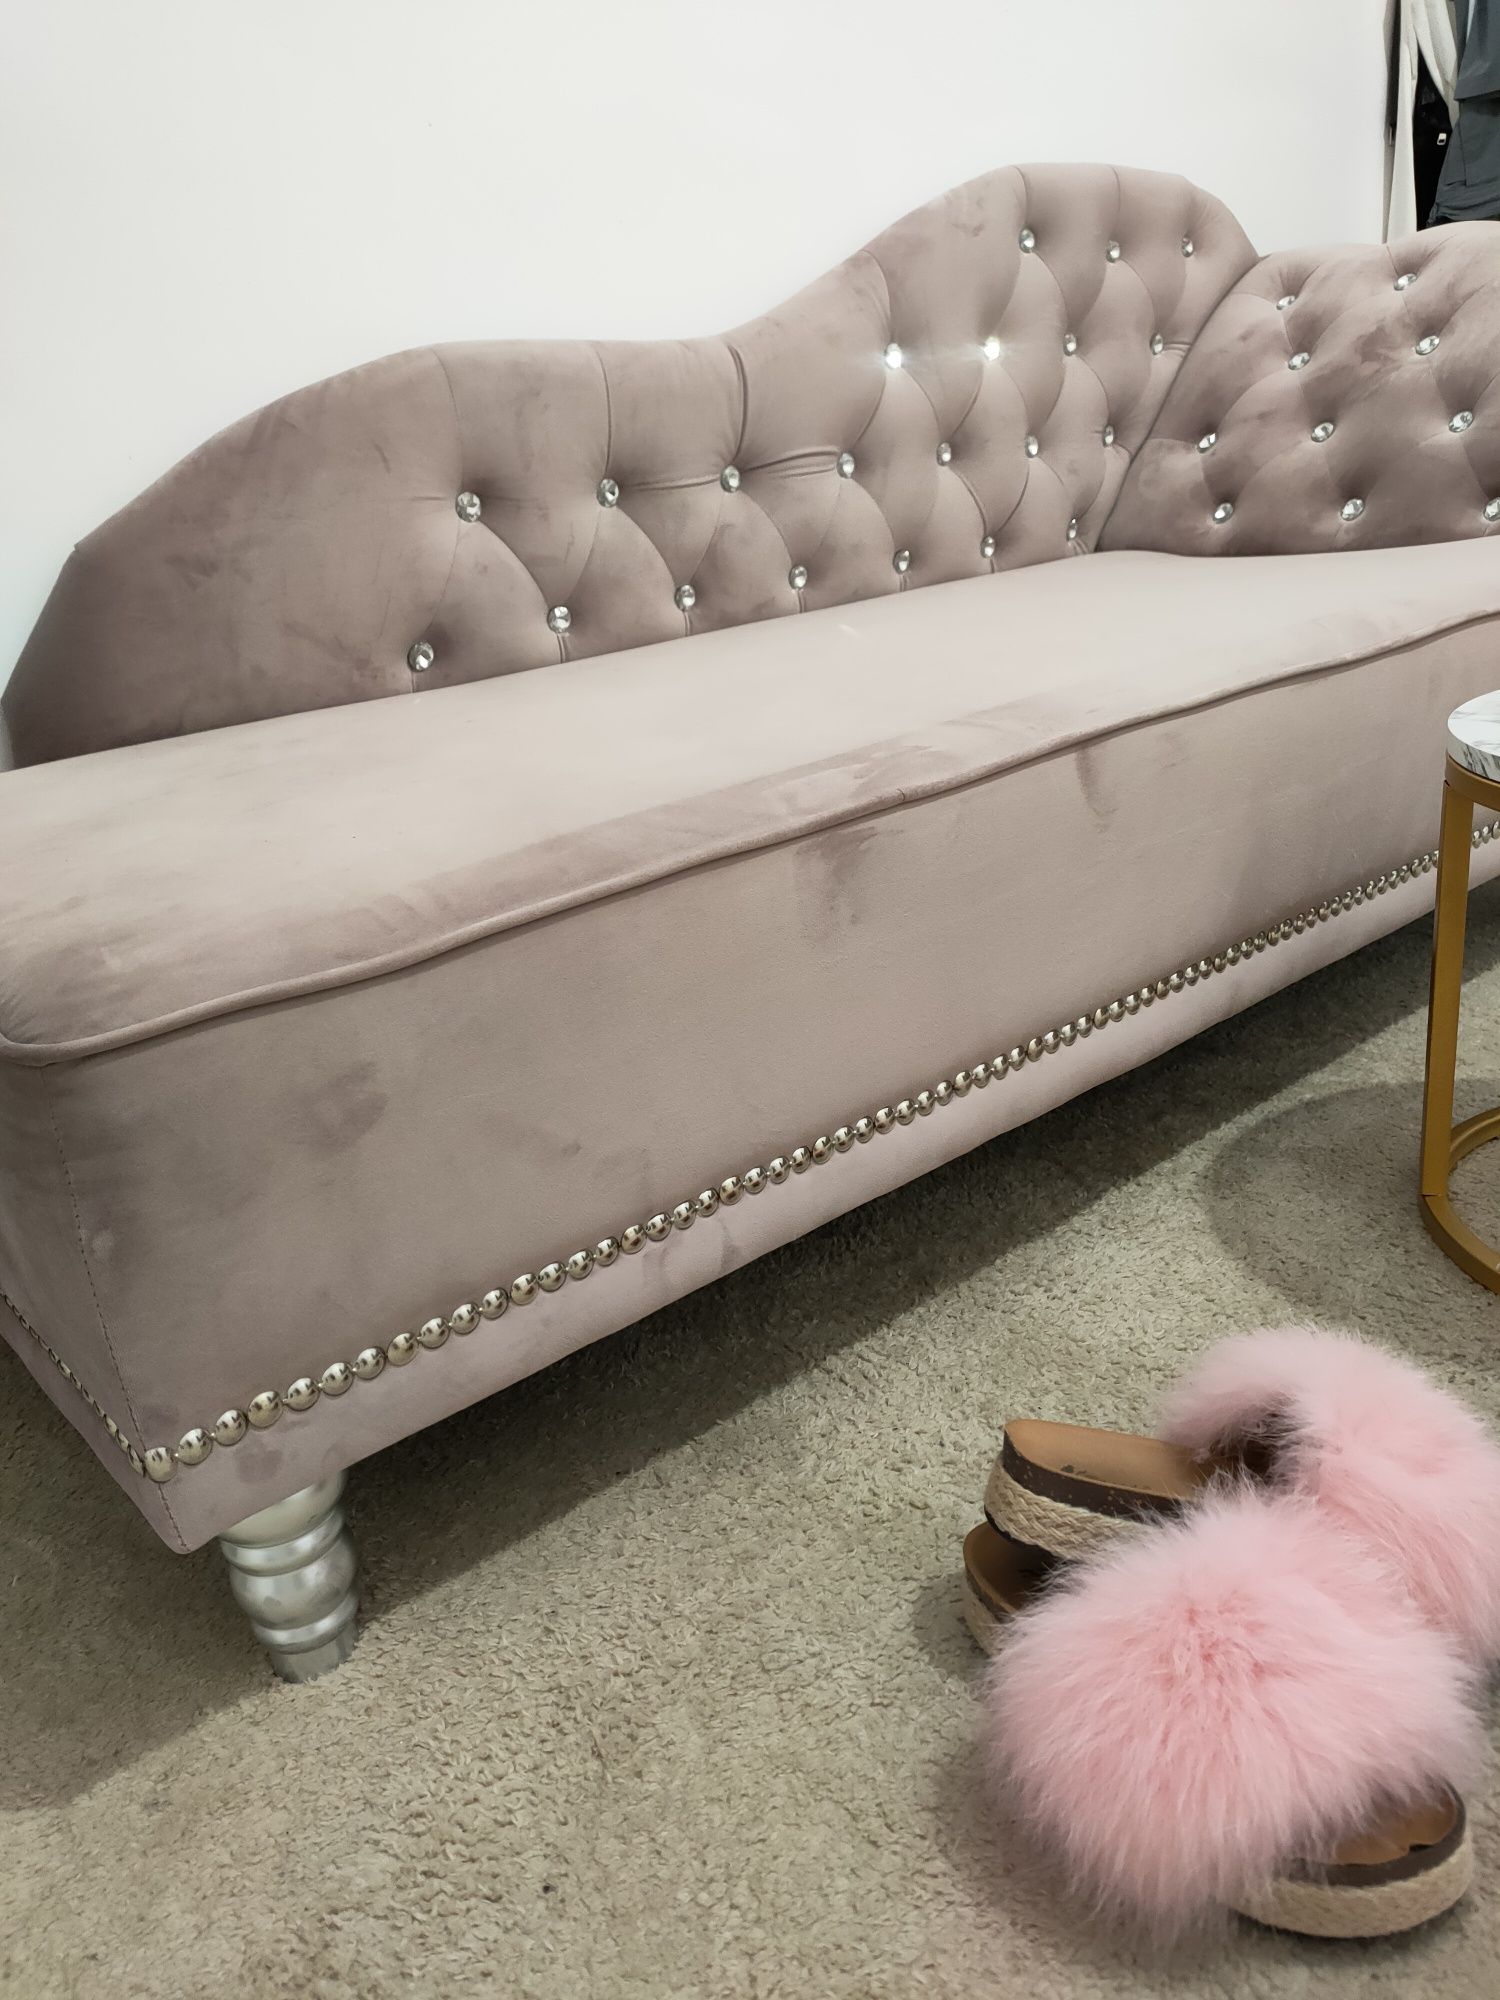 Szezlong pudrowy róż Glamour sofa pikowana